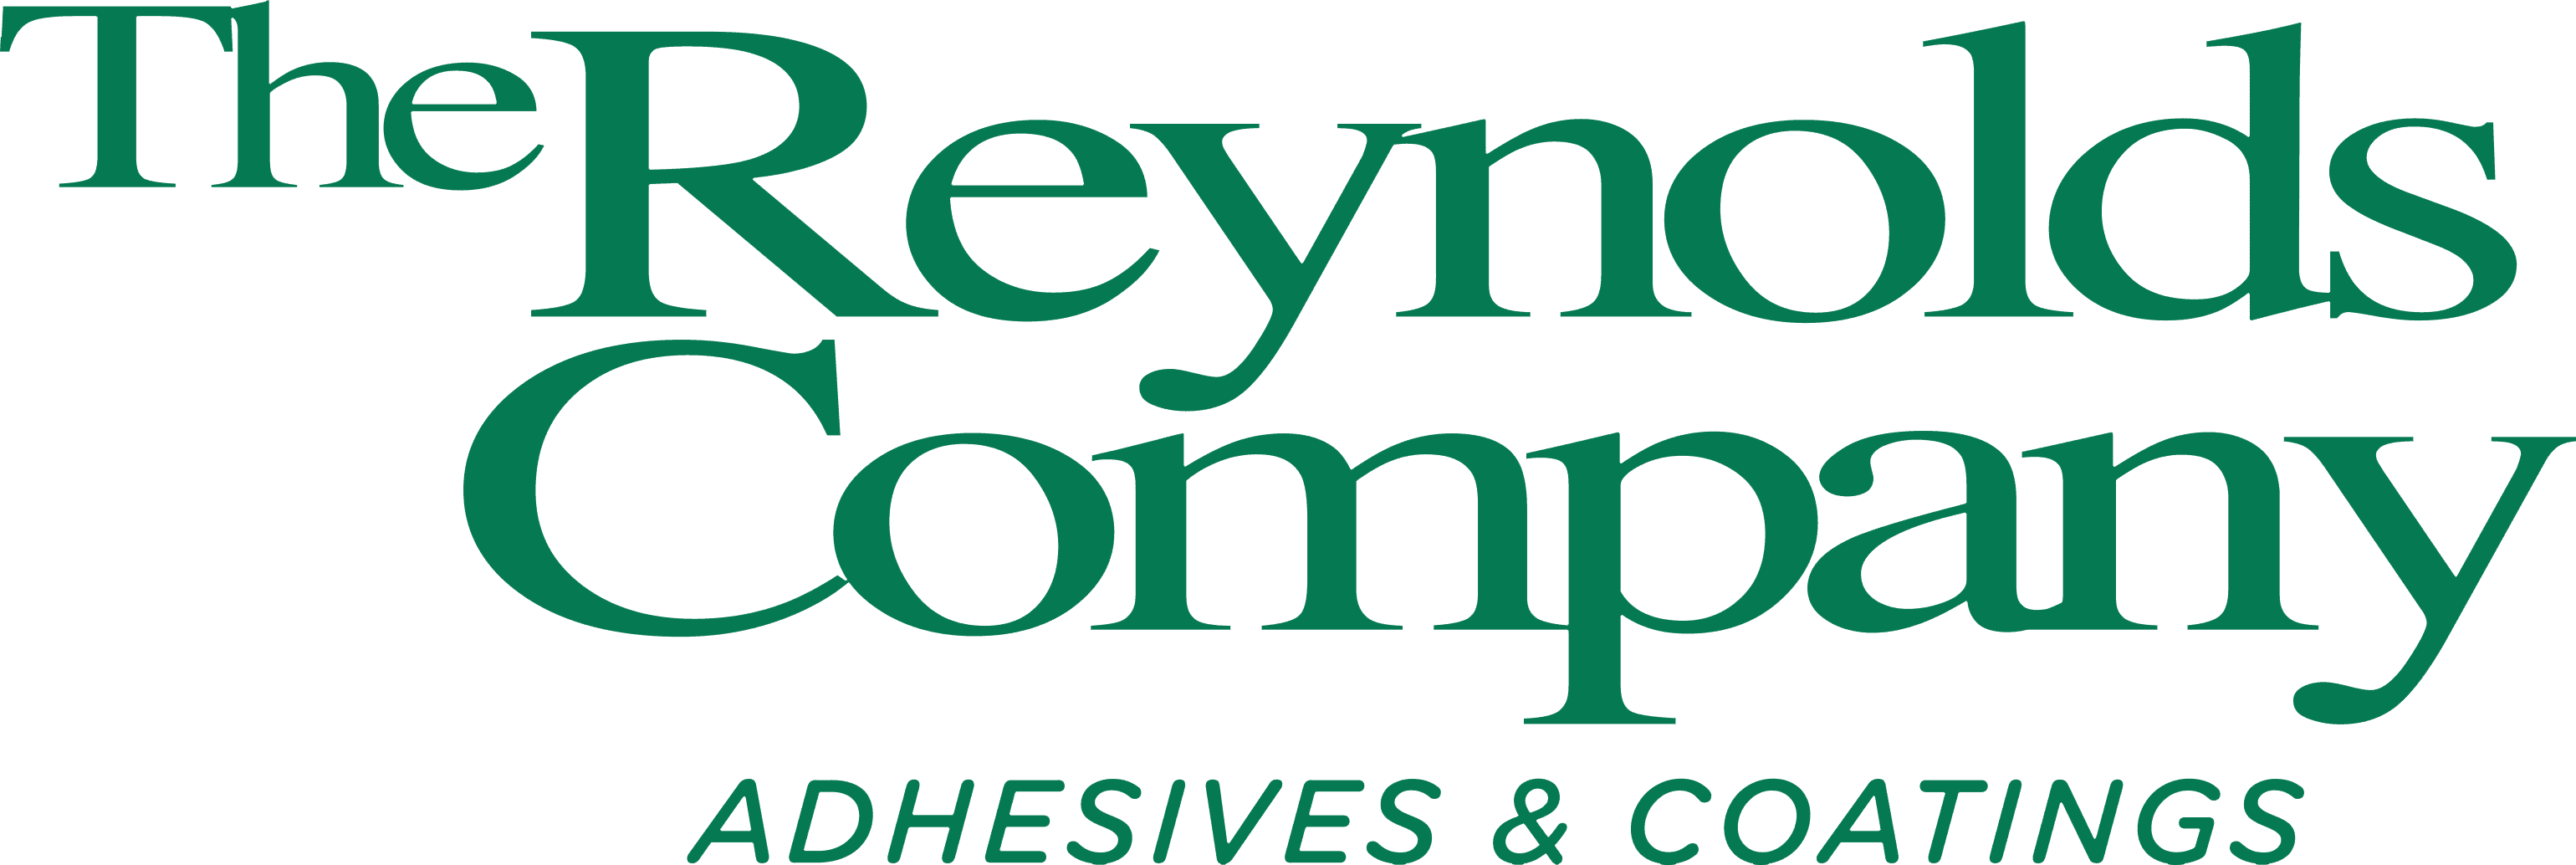 The Reynolds Company 